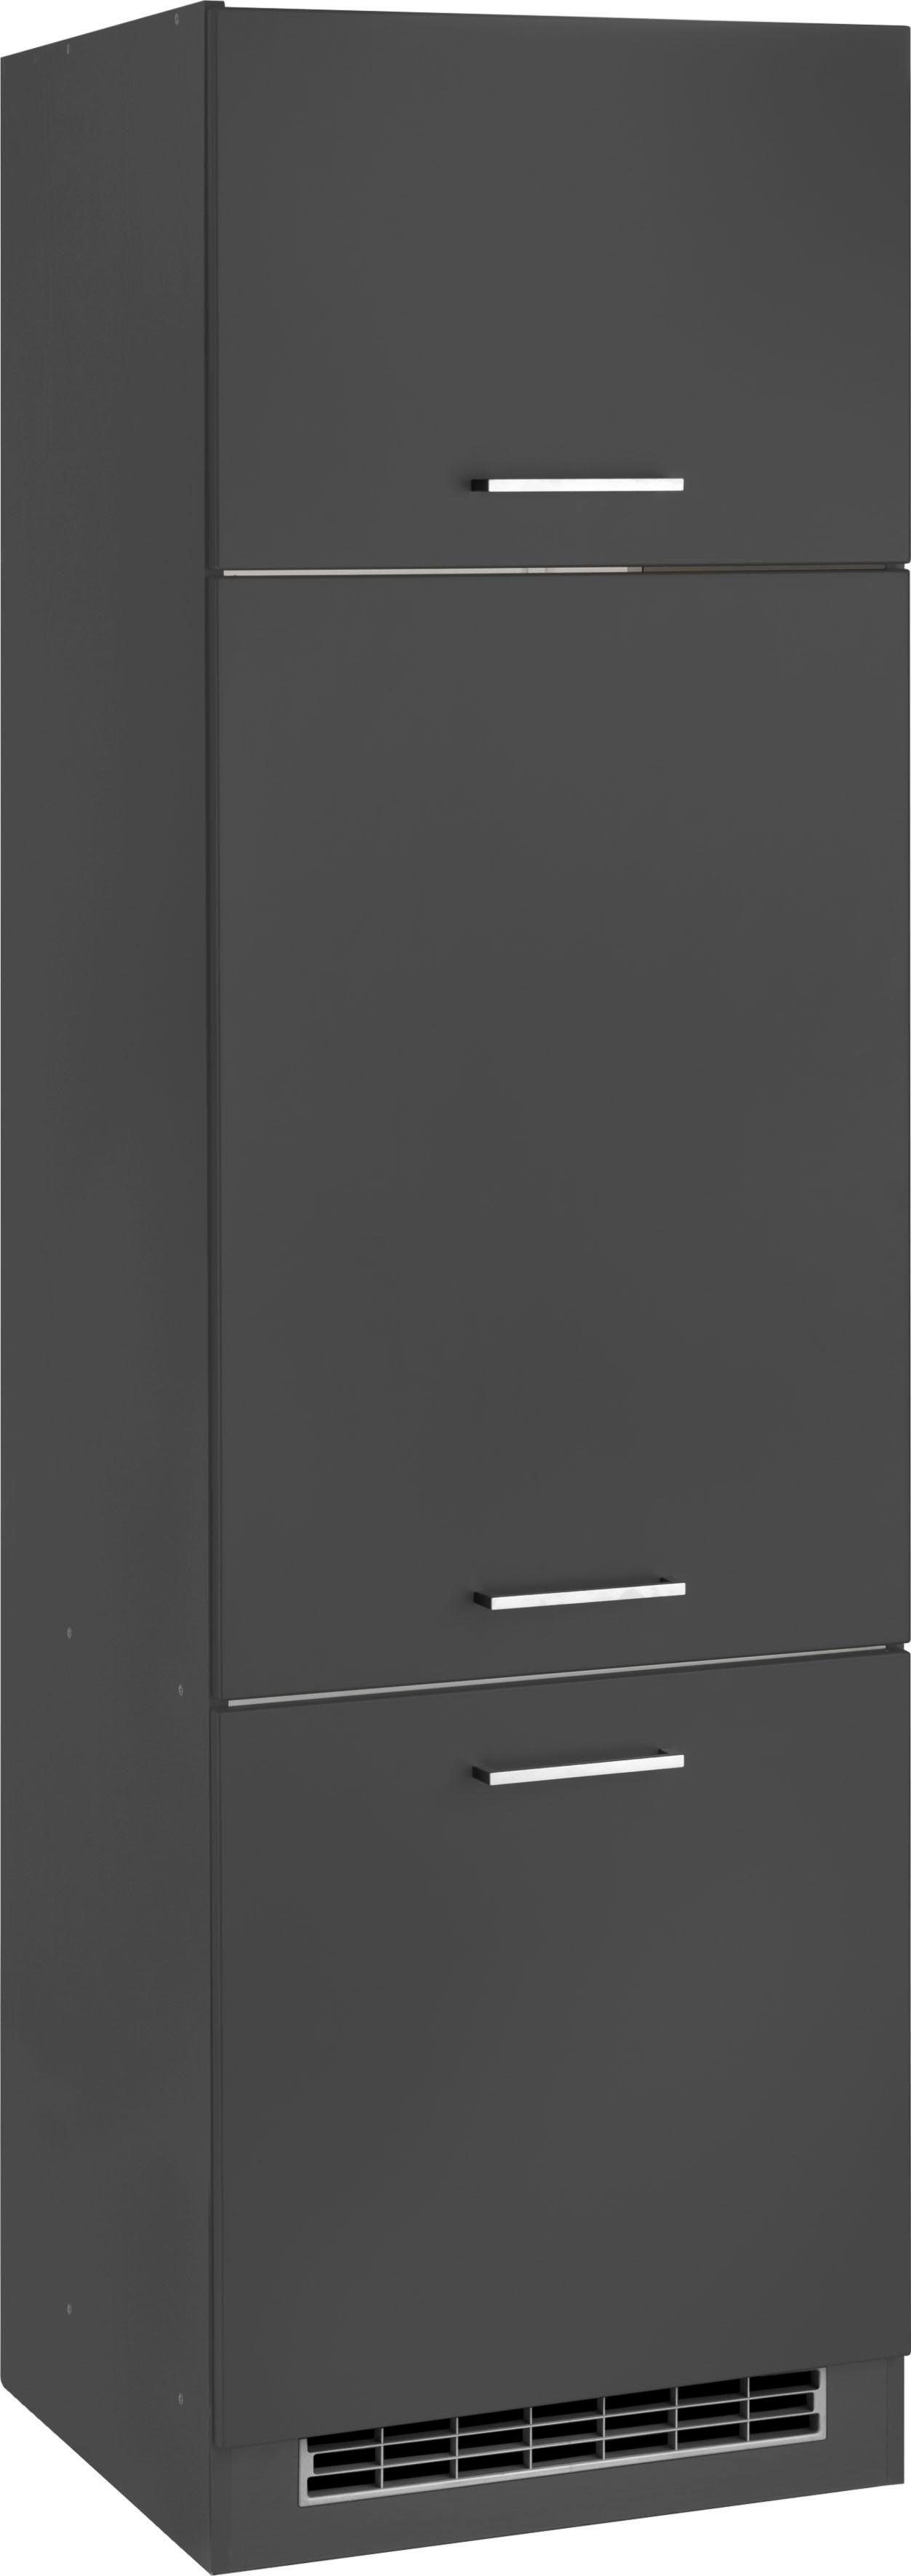 HELD MÖBEL Kühlumbauschrank Kehl für Einbaukühlschrank, Nischenhöhe 88cm grau | grafit